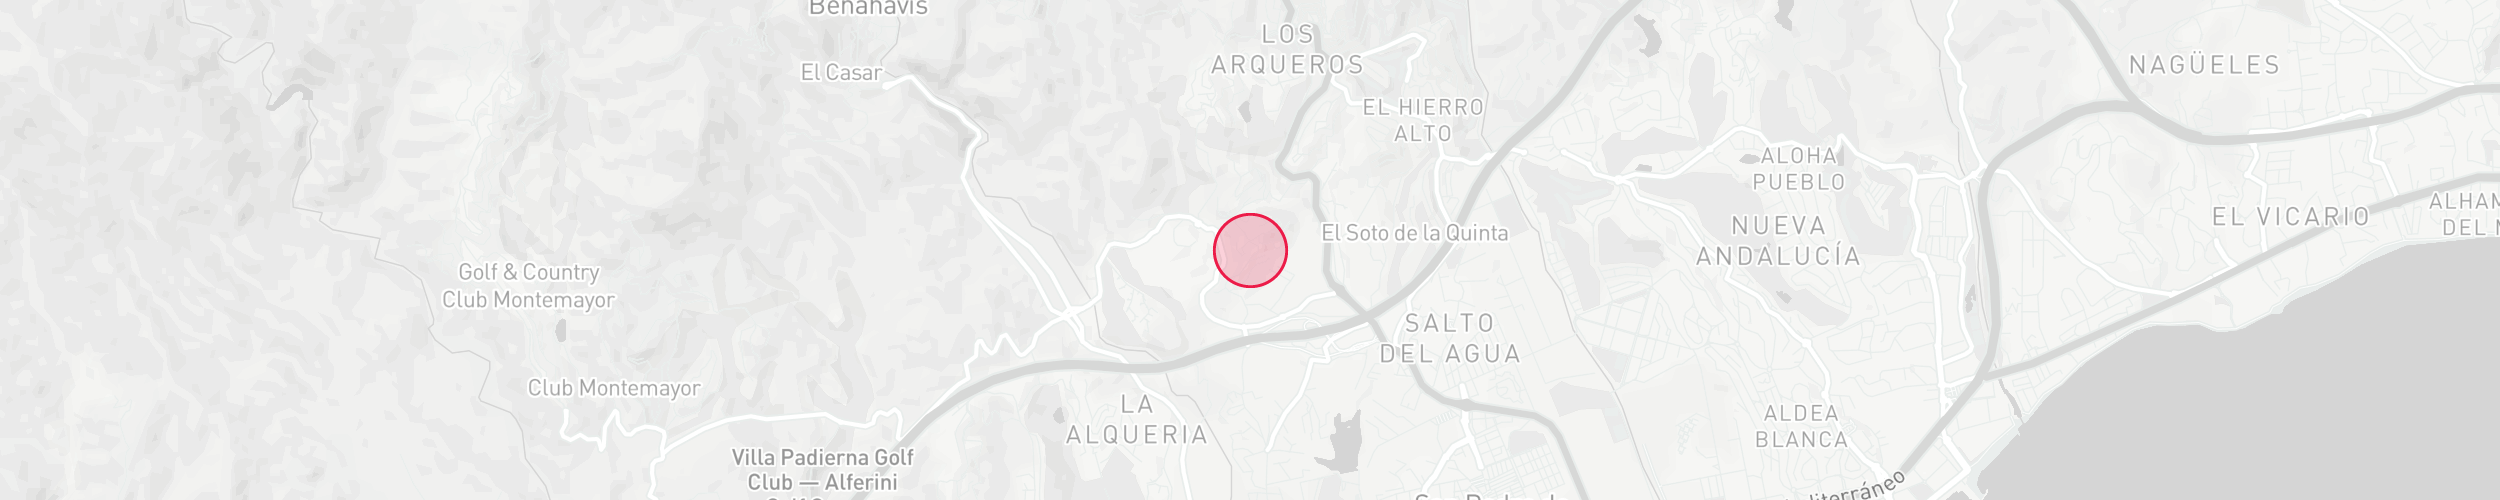 Property Location Map - Puerto del Capitan